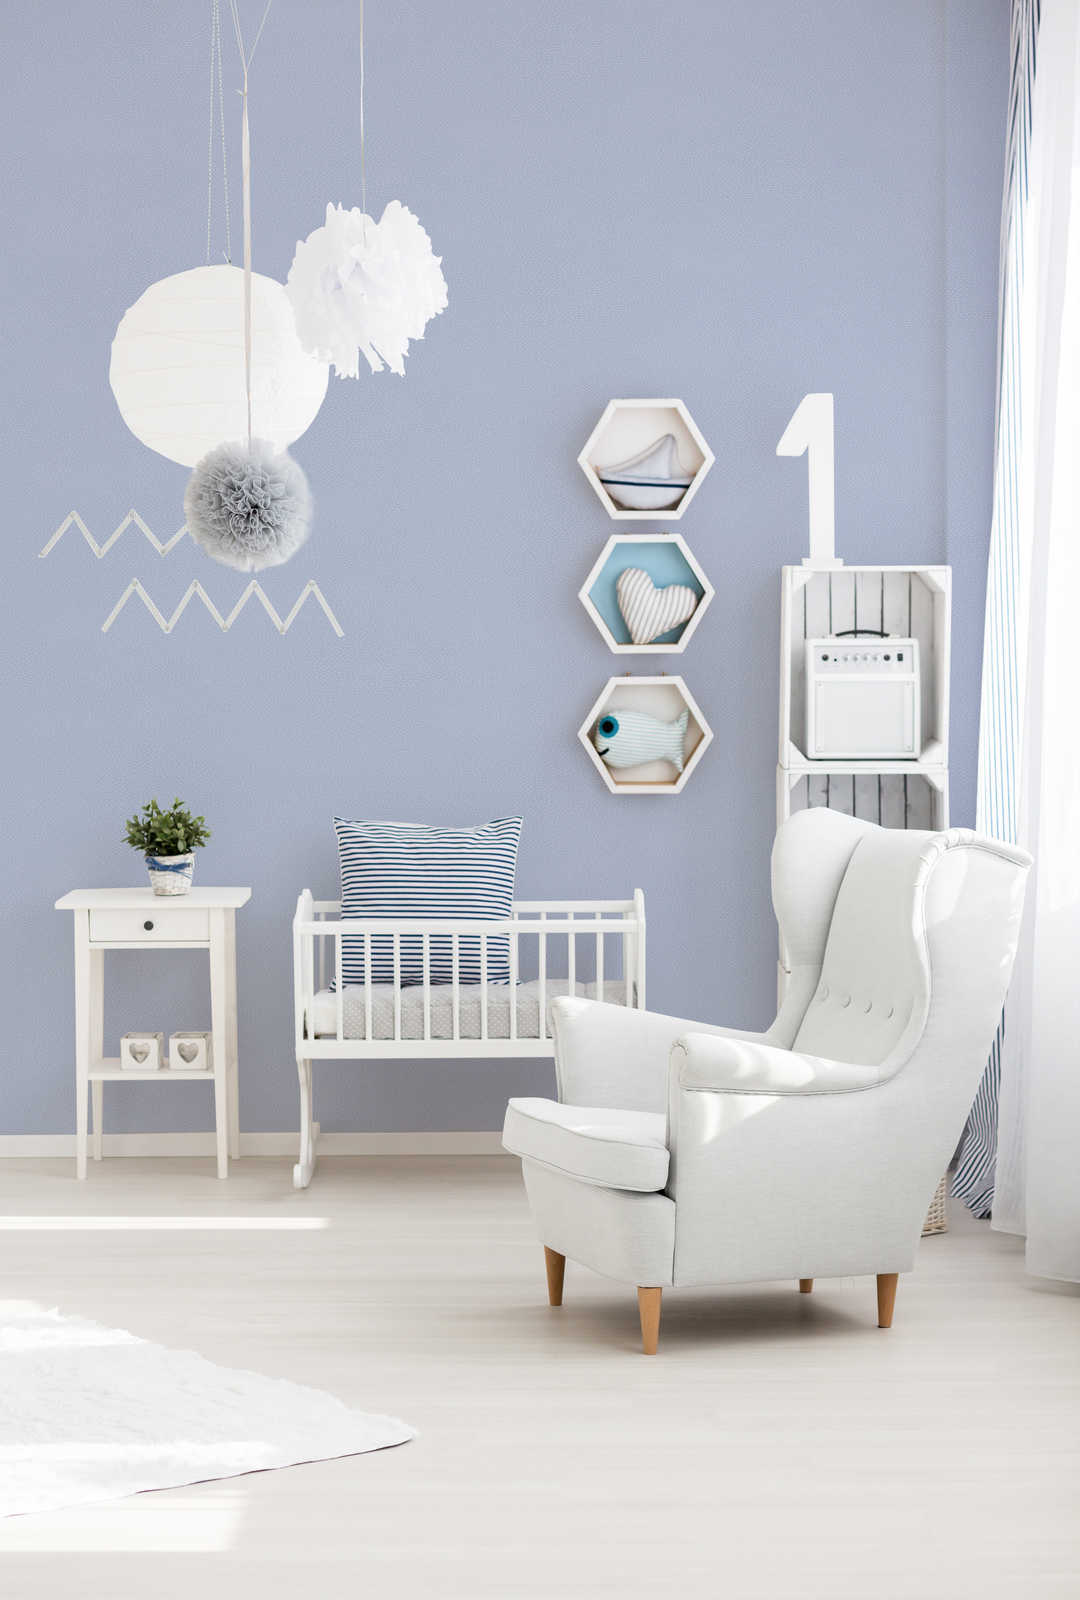             Kinderzimmer Tapete horizontale Striche – Blau, Grau, Weiß
        